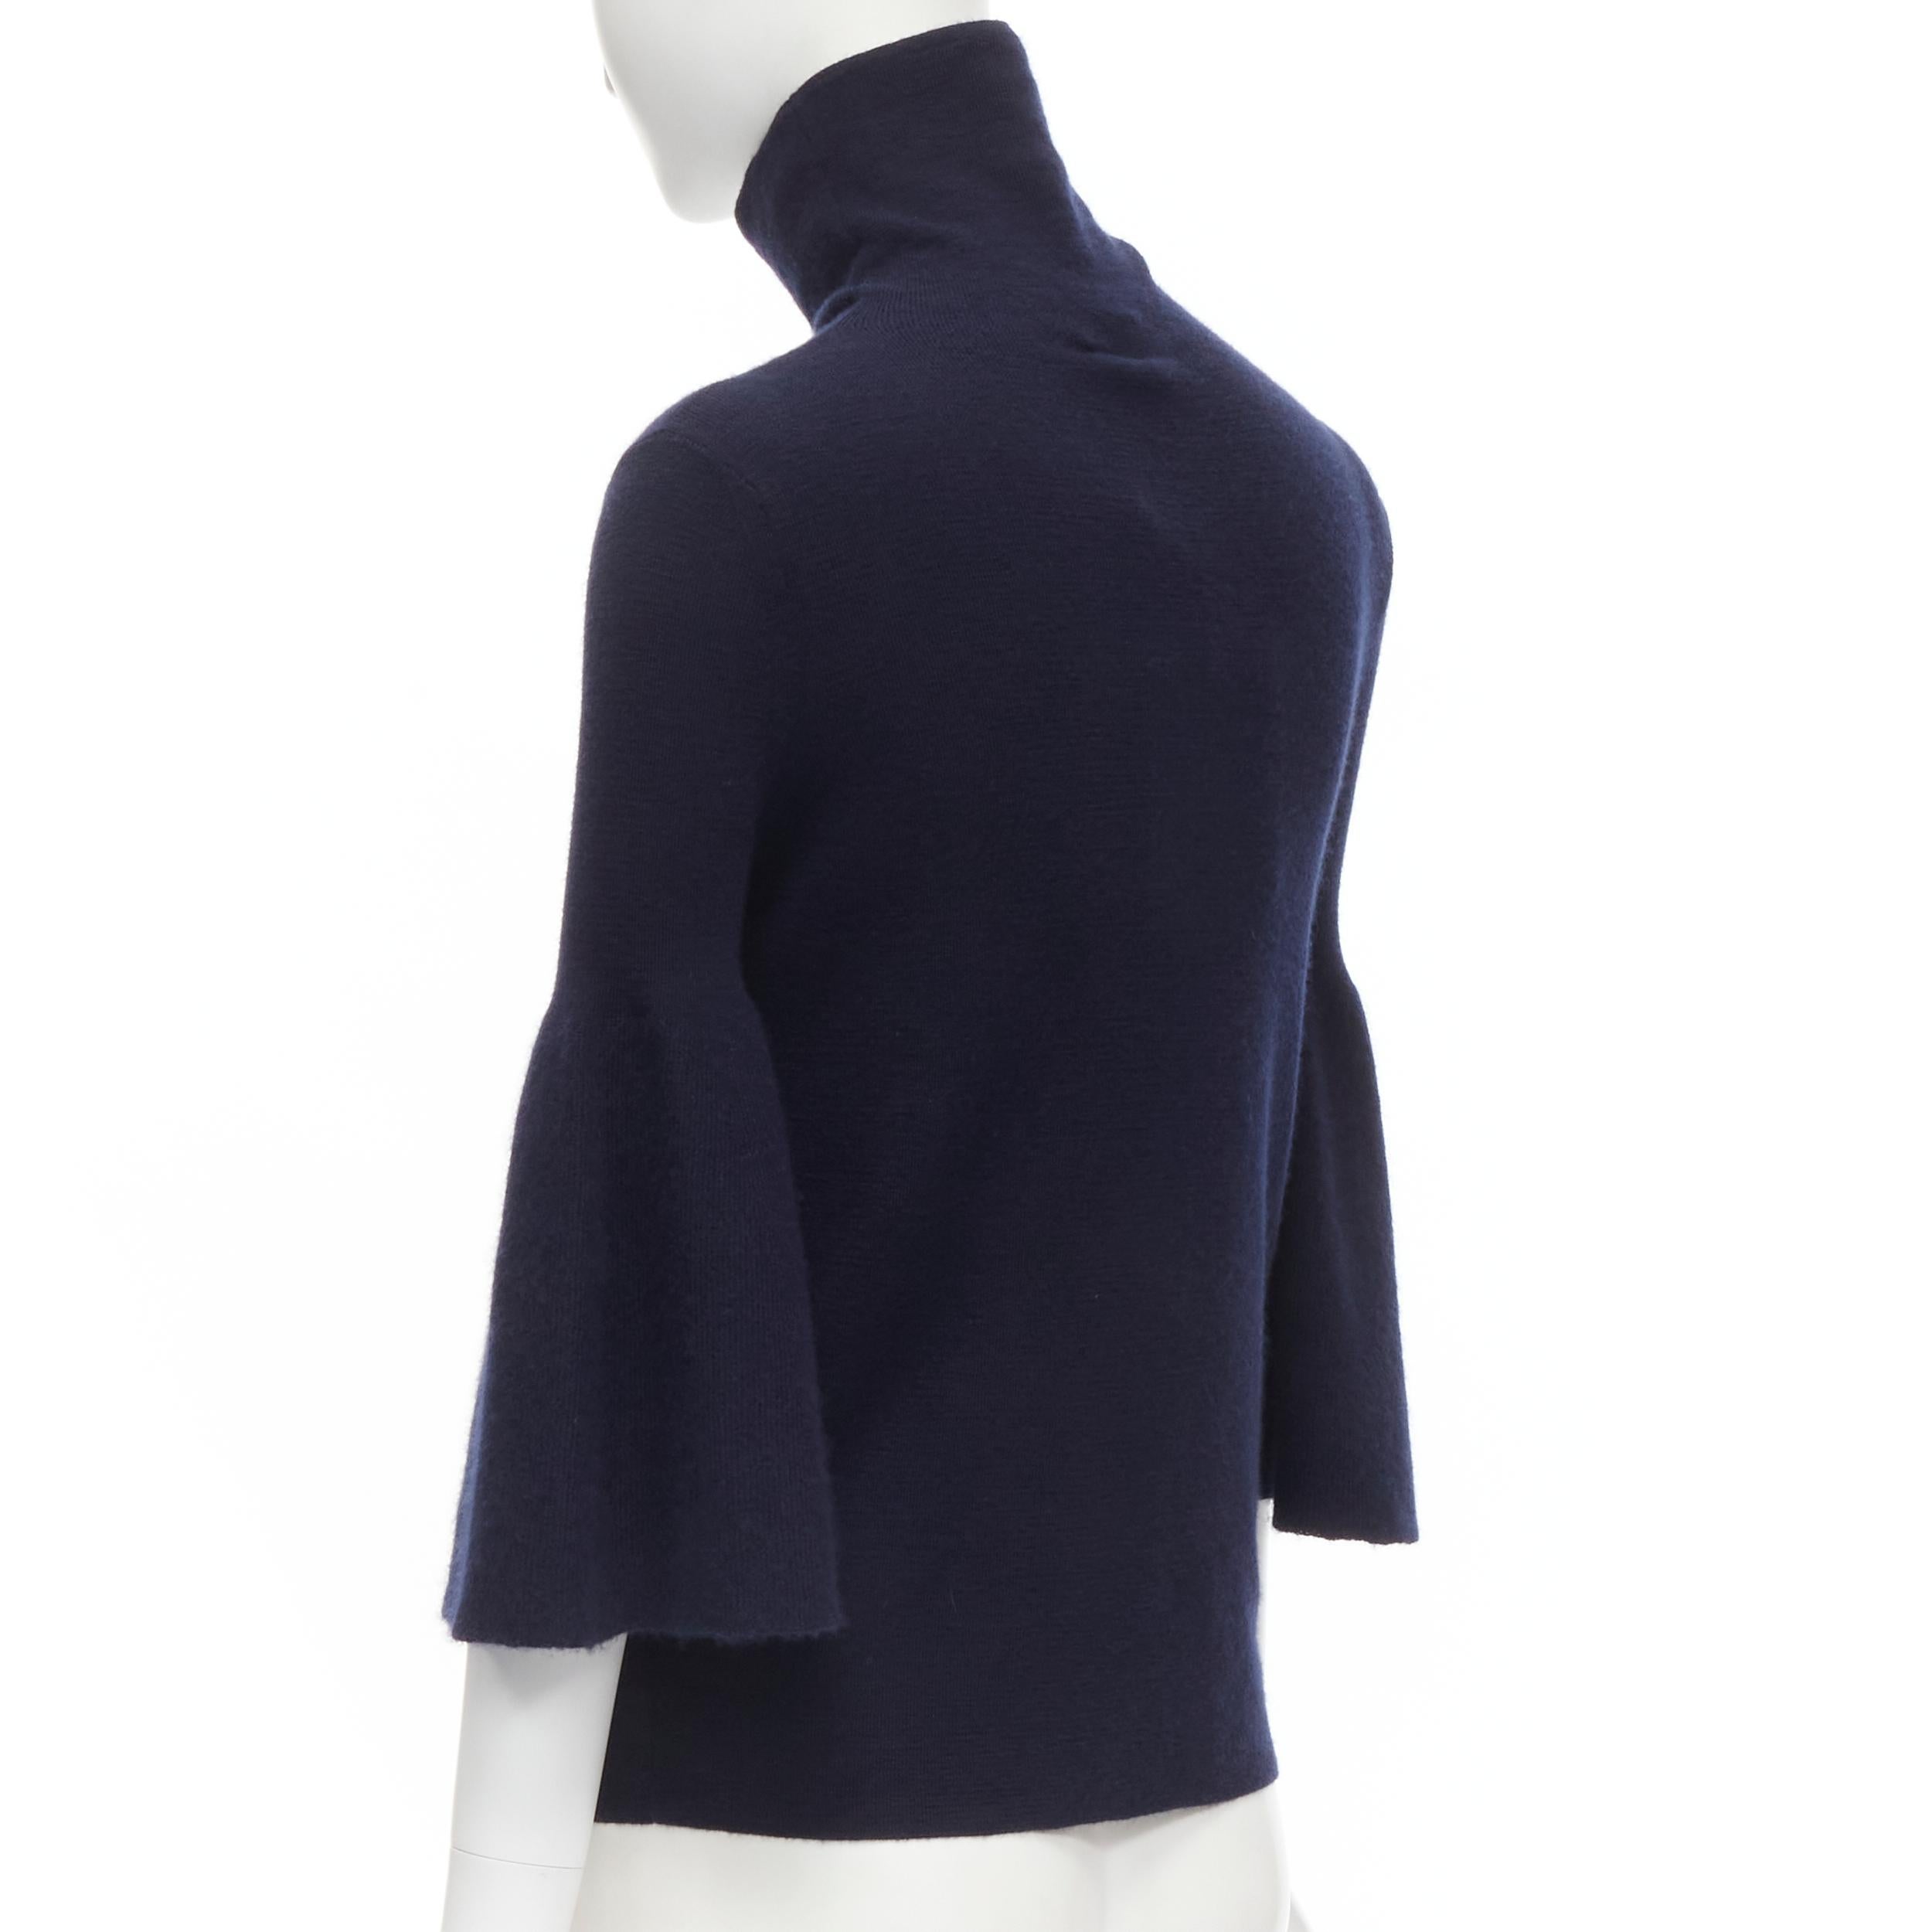 Black new THE ROW Adara dark navy cashmere silk bell sleeve turtleneck sweater S